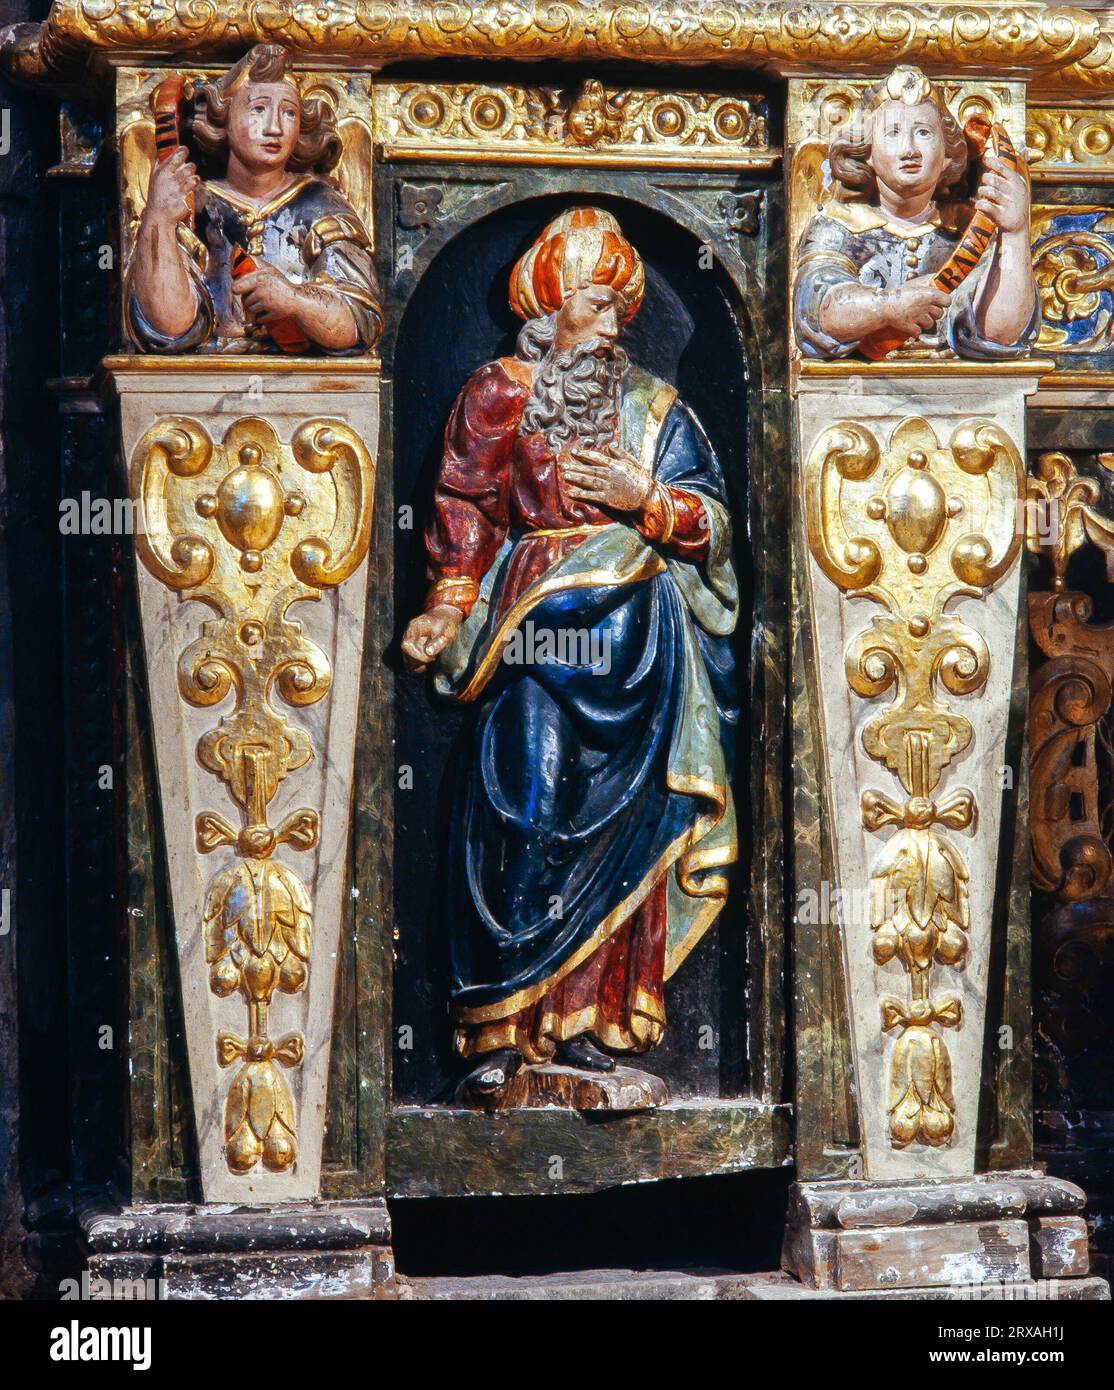 Pau Sunyer / Retablo de la iglesia de Sant Joan d'Oló, siglo XVII Banque D'Images